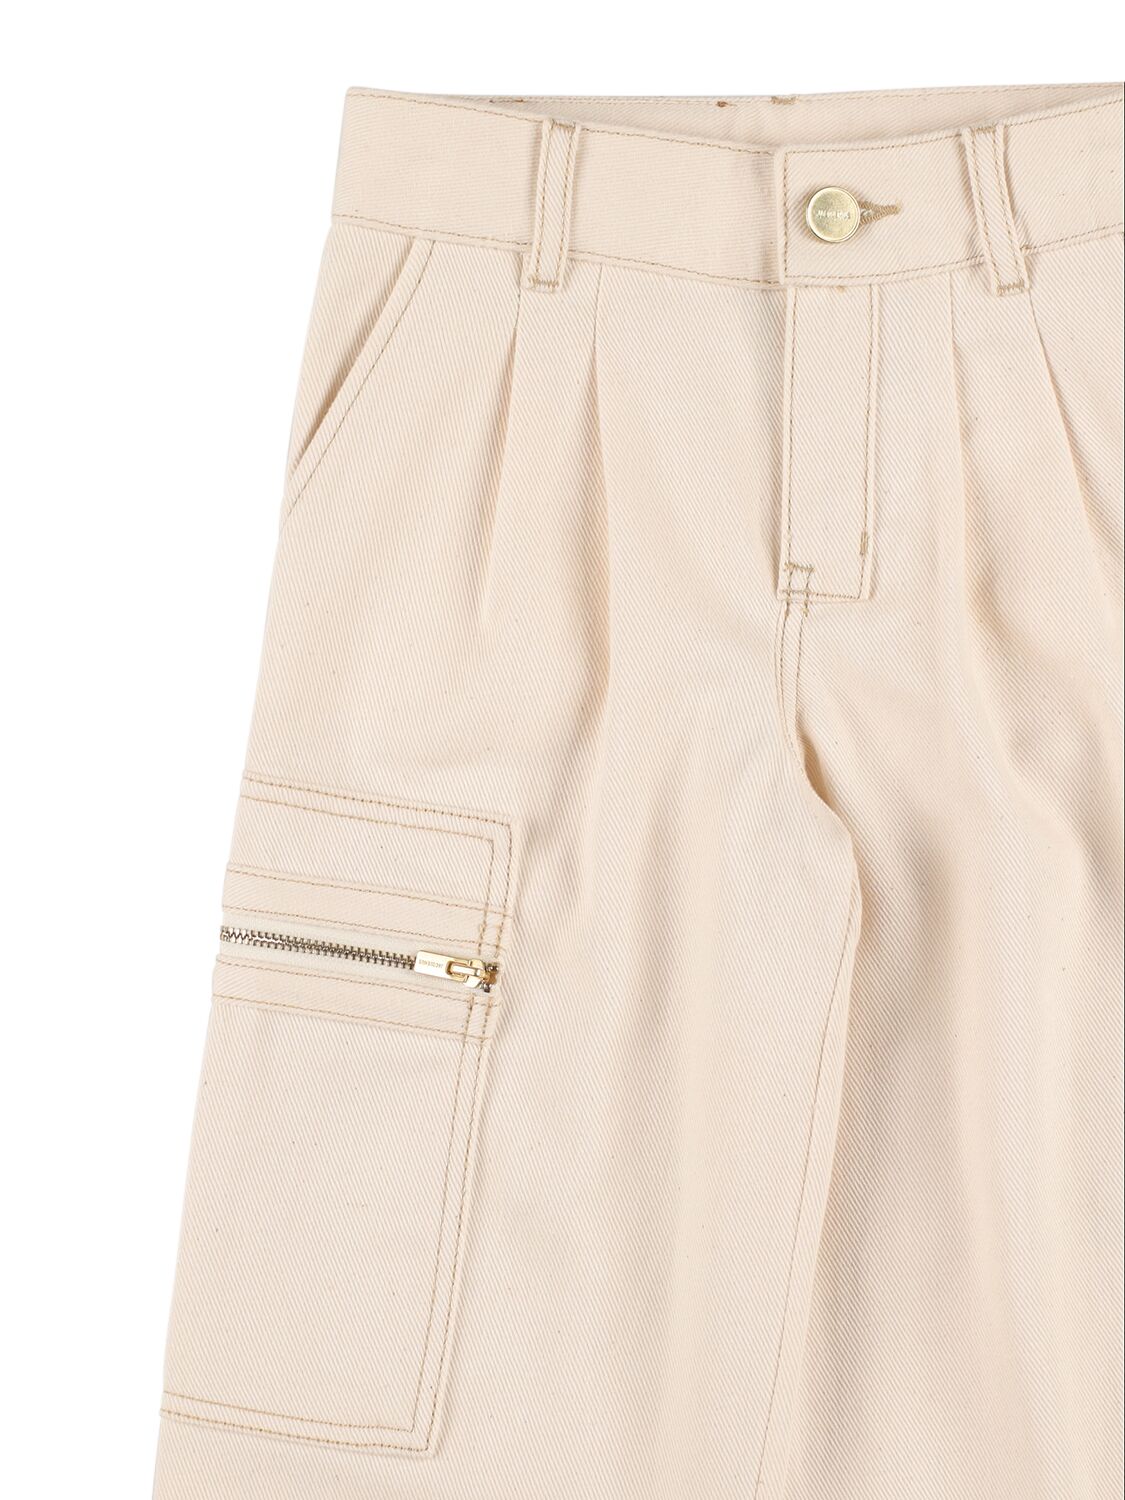 Shop Jacquemus Cotton Cargo Pants In Off-white